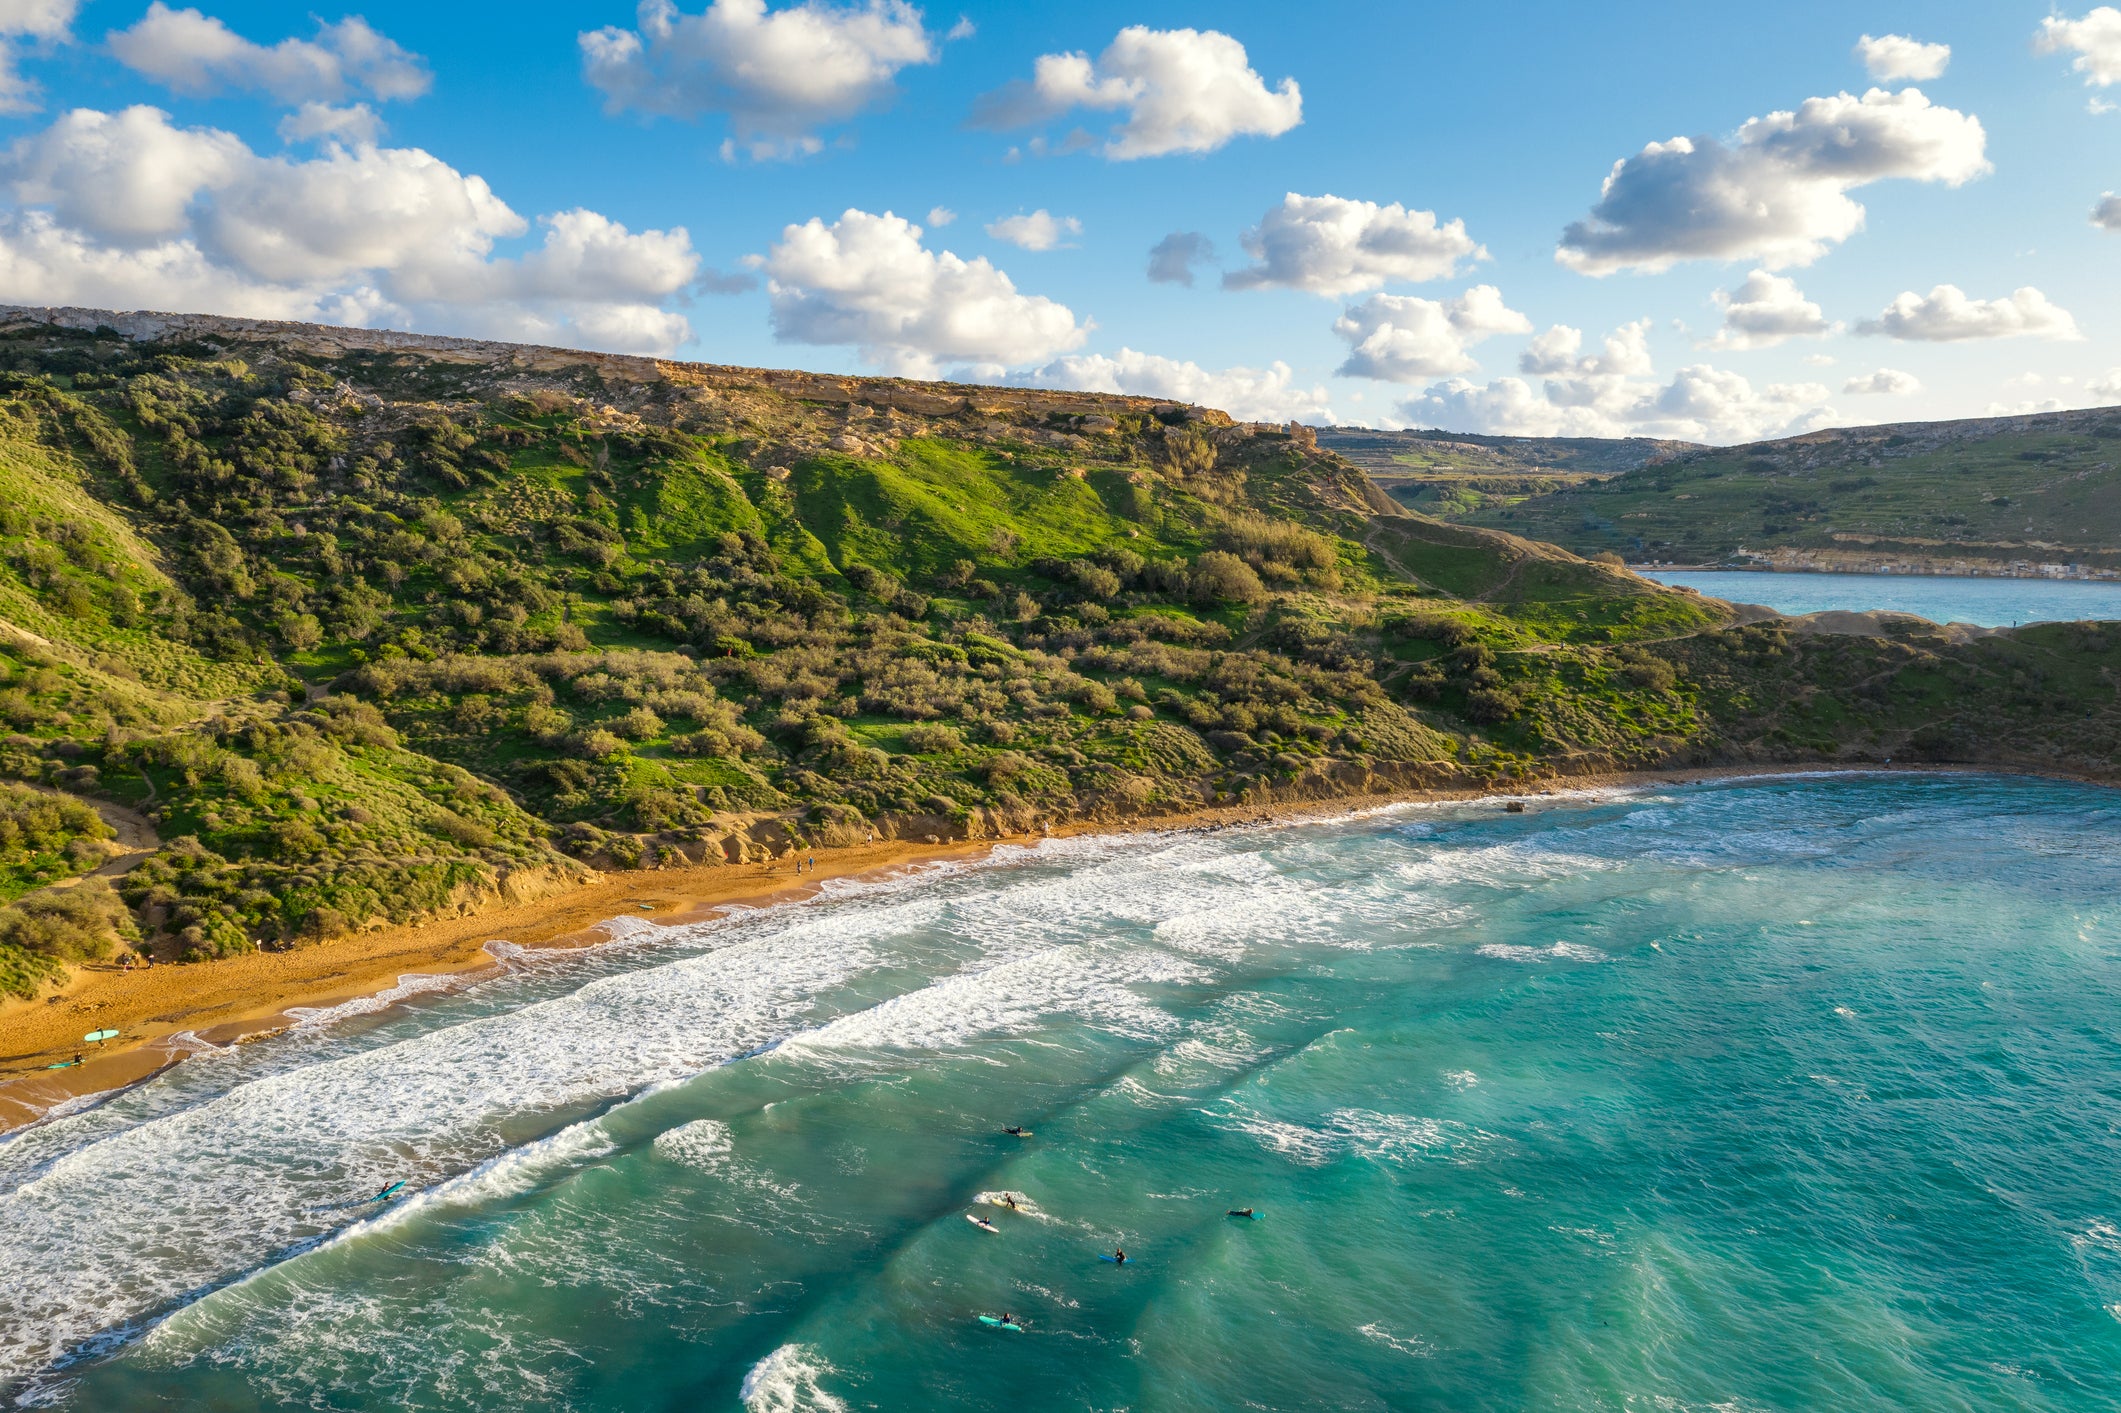 Ghajn Tuffieha is a Blue Flag beach situated on Malta’s picturesque northwest coast